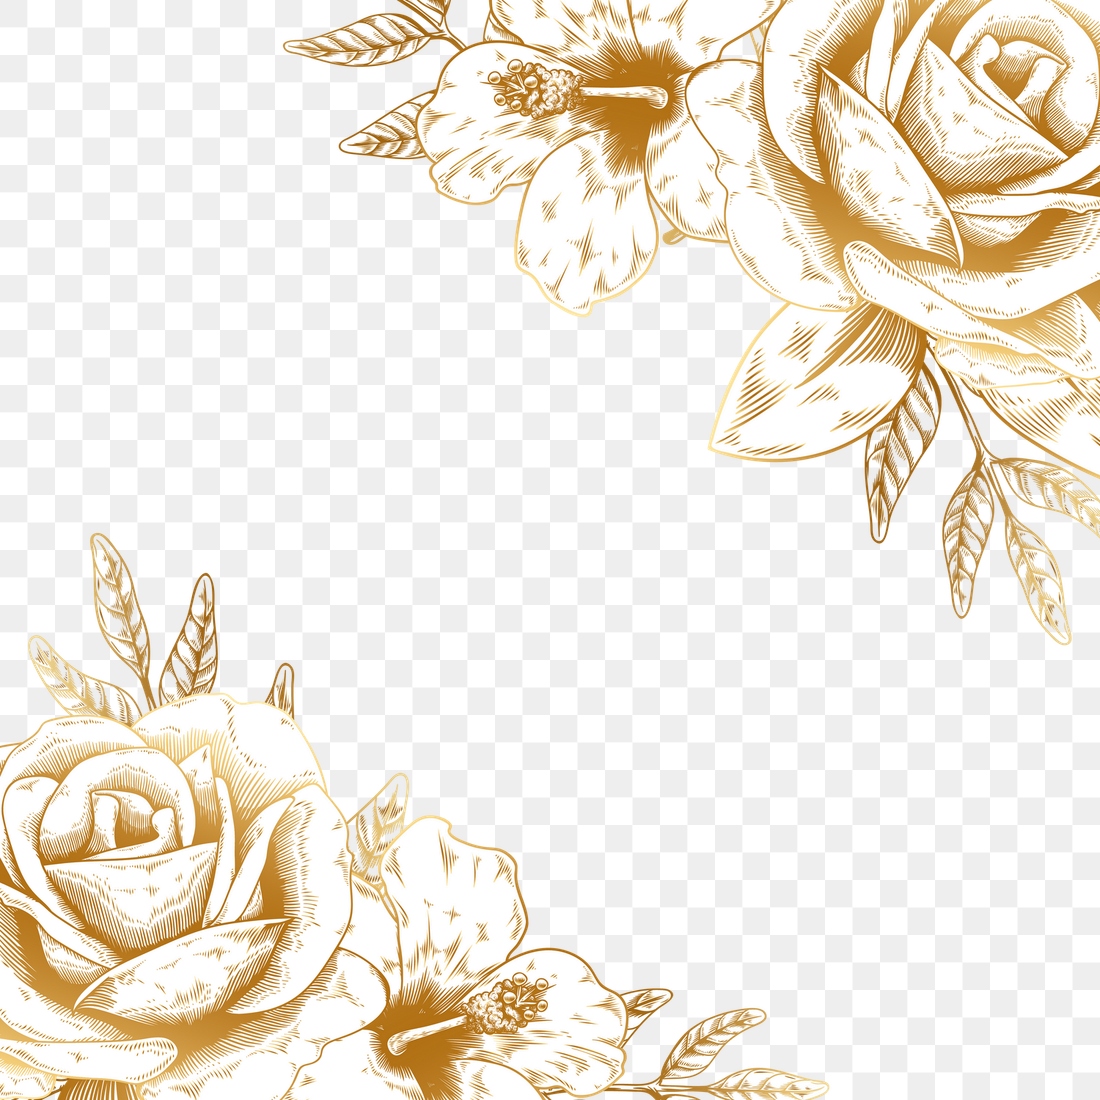 Hand drawn gold rose border | Premium PNG - rawpixel